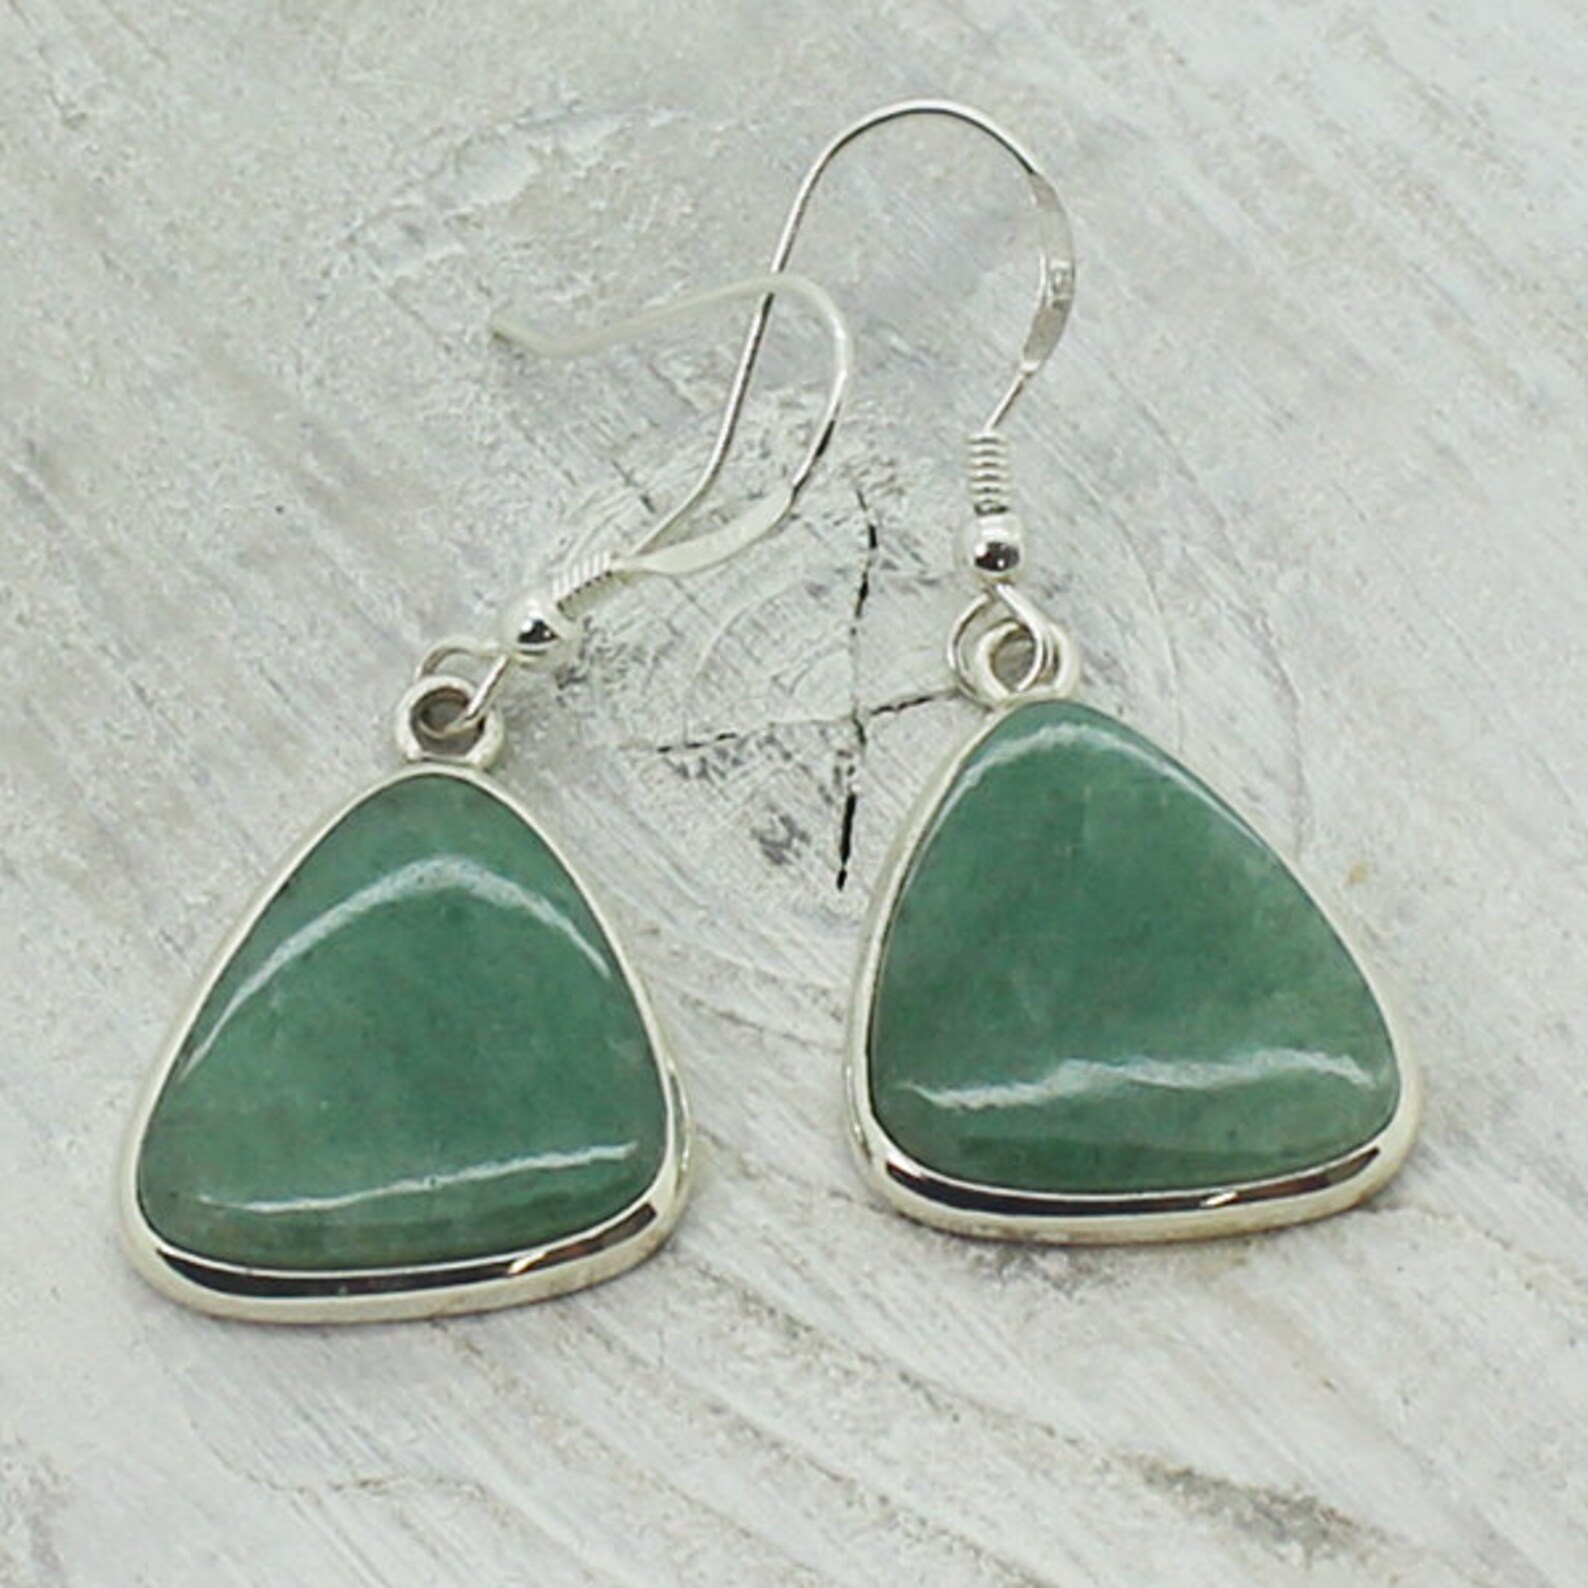 Green aventurine earrings genuine aventurine stone cabochon | Etsy